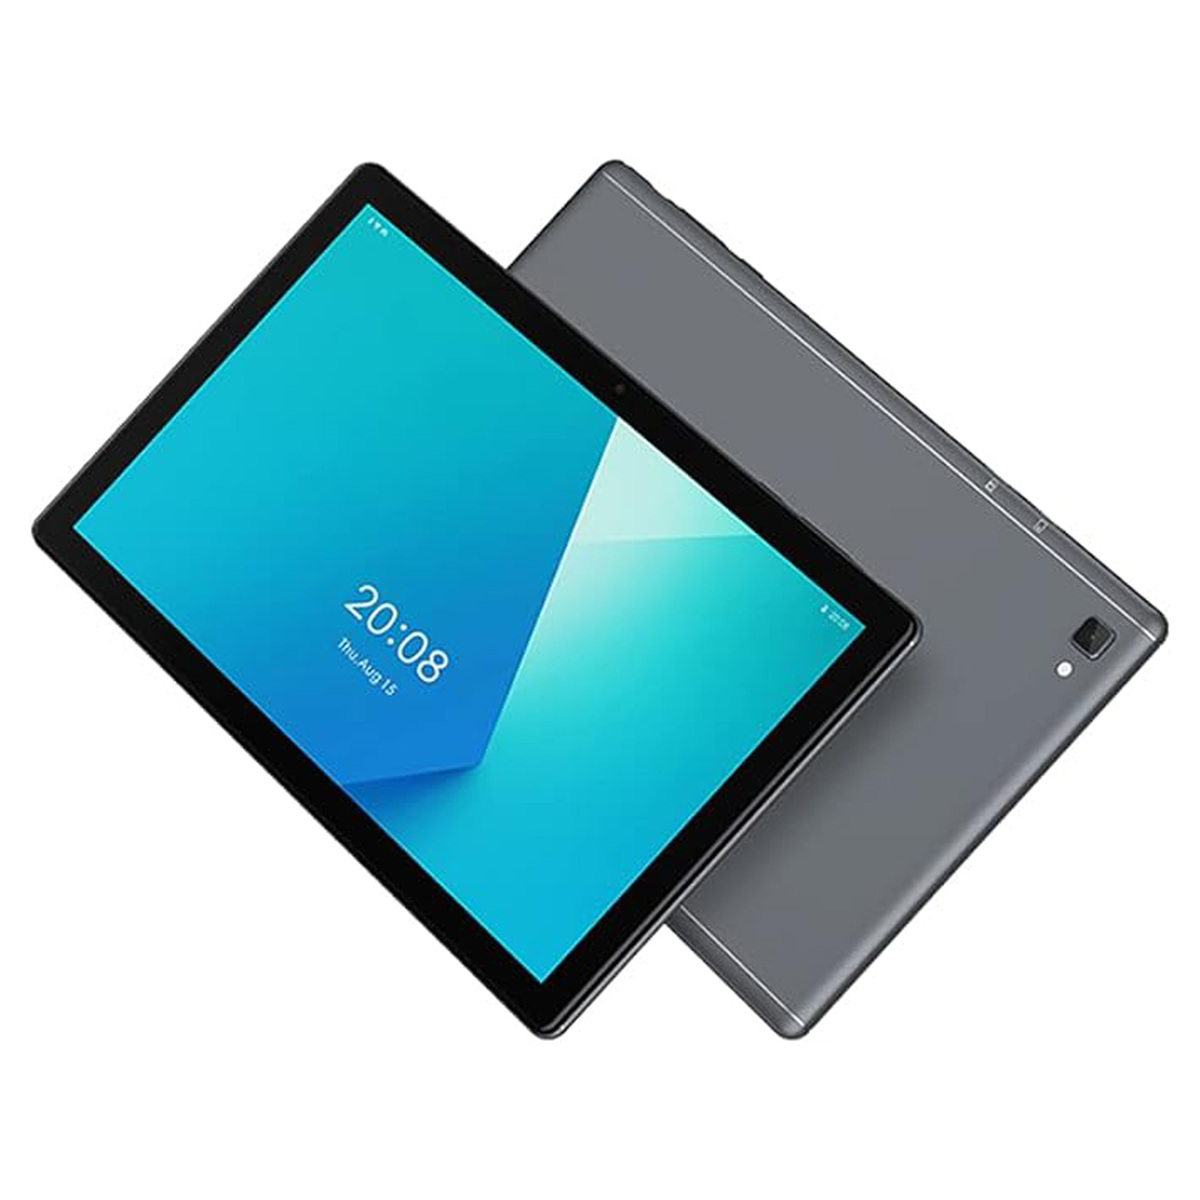 Gtab S12 3G Tablet, 10.1 inches Display, 2 GB RAM, 32 GB STORAGE, Gray